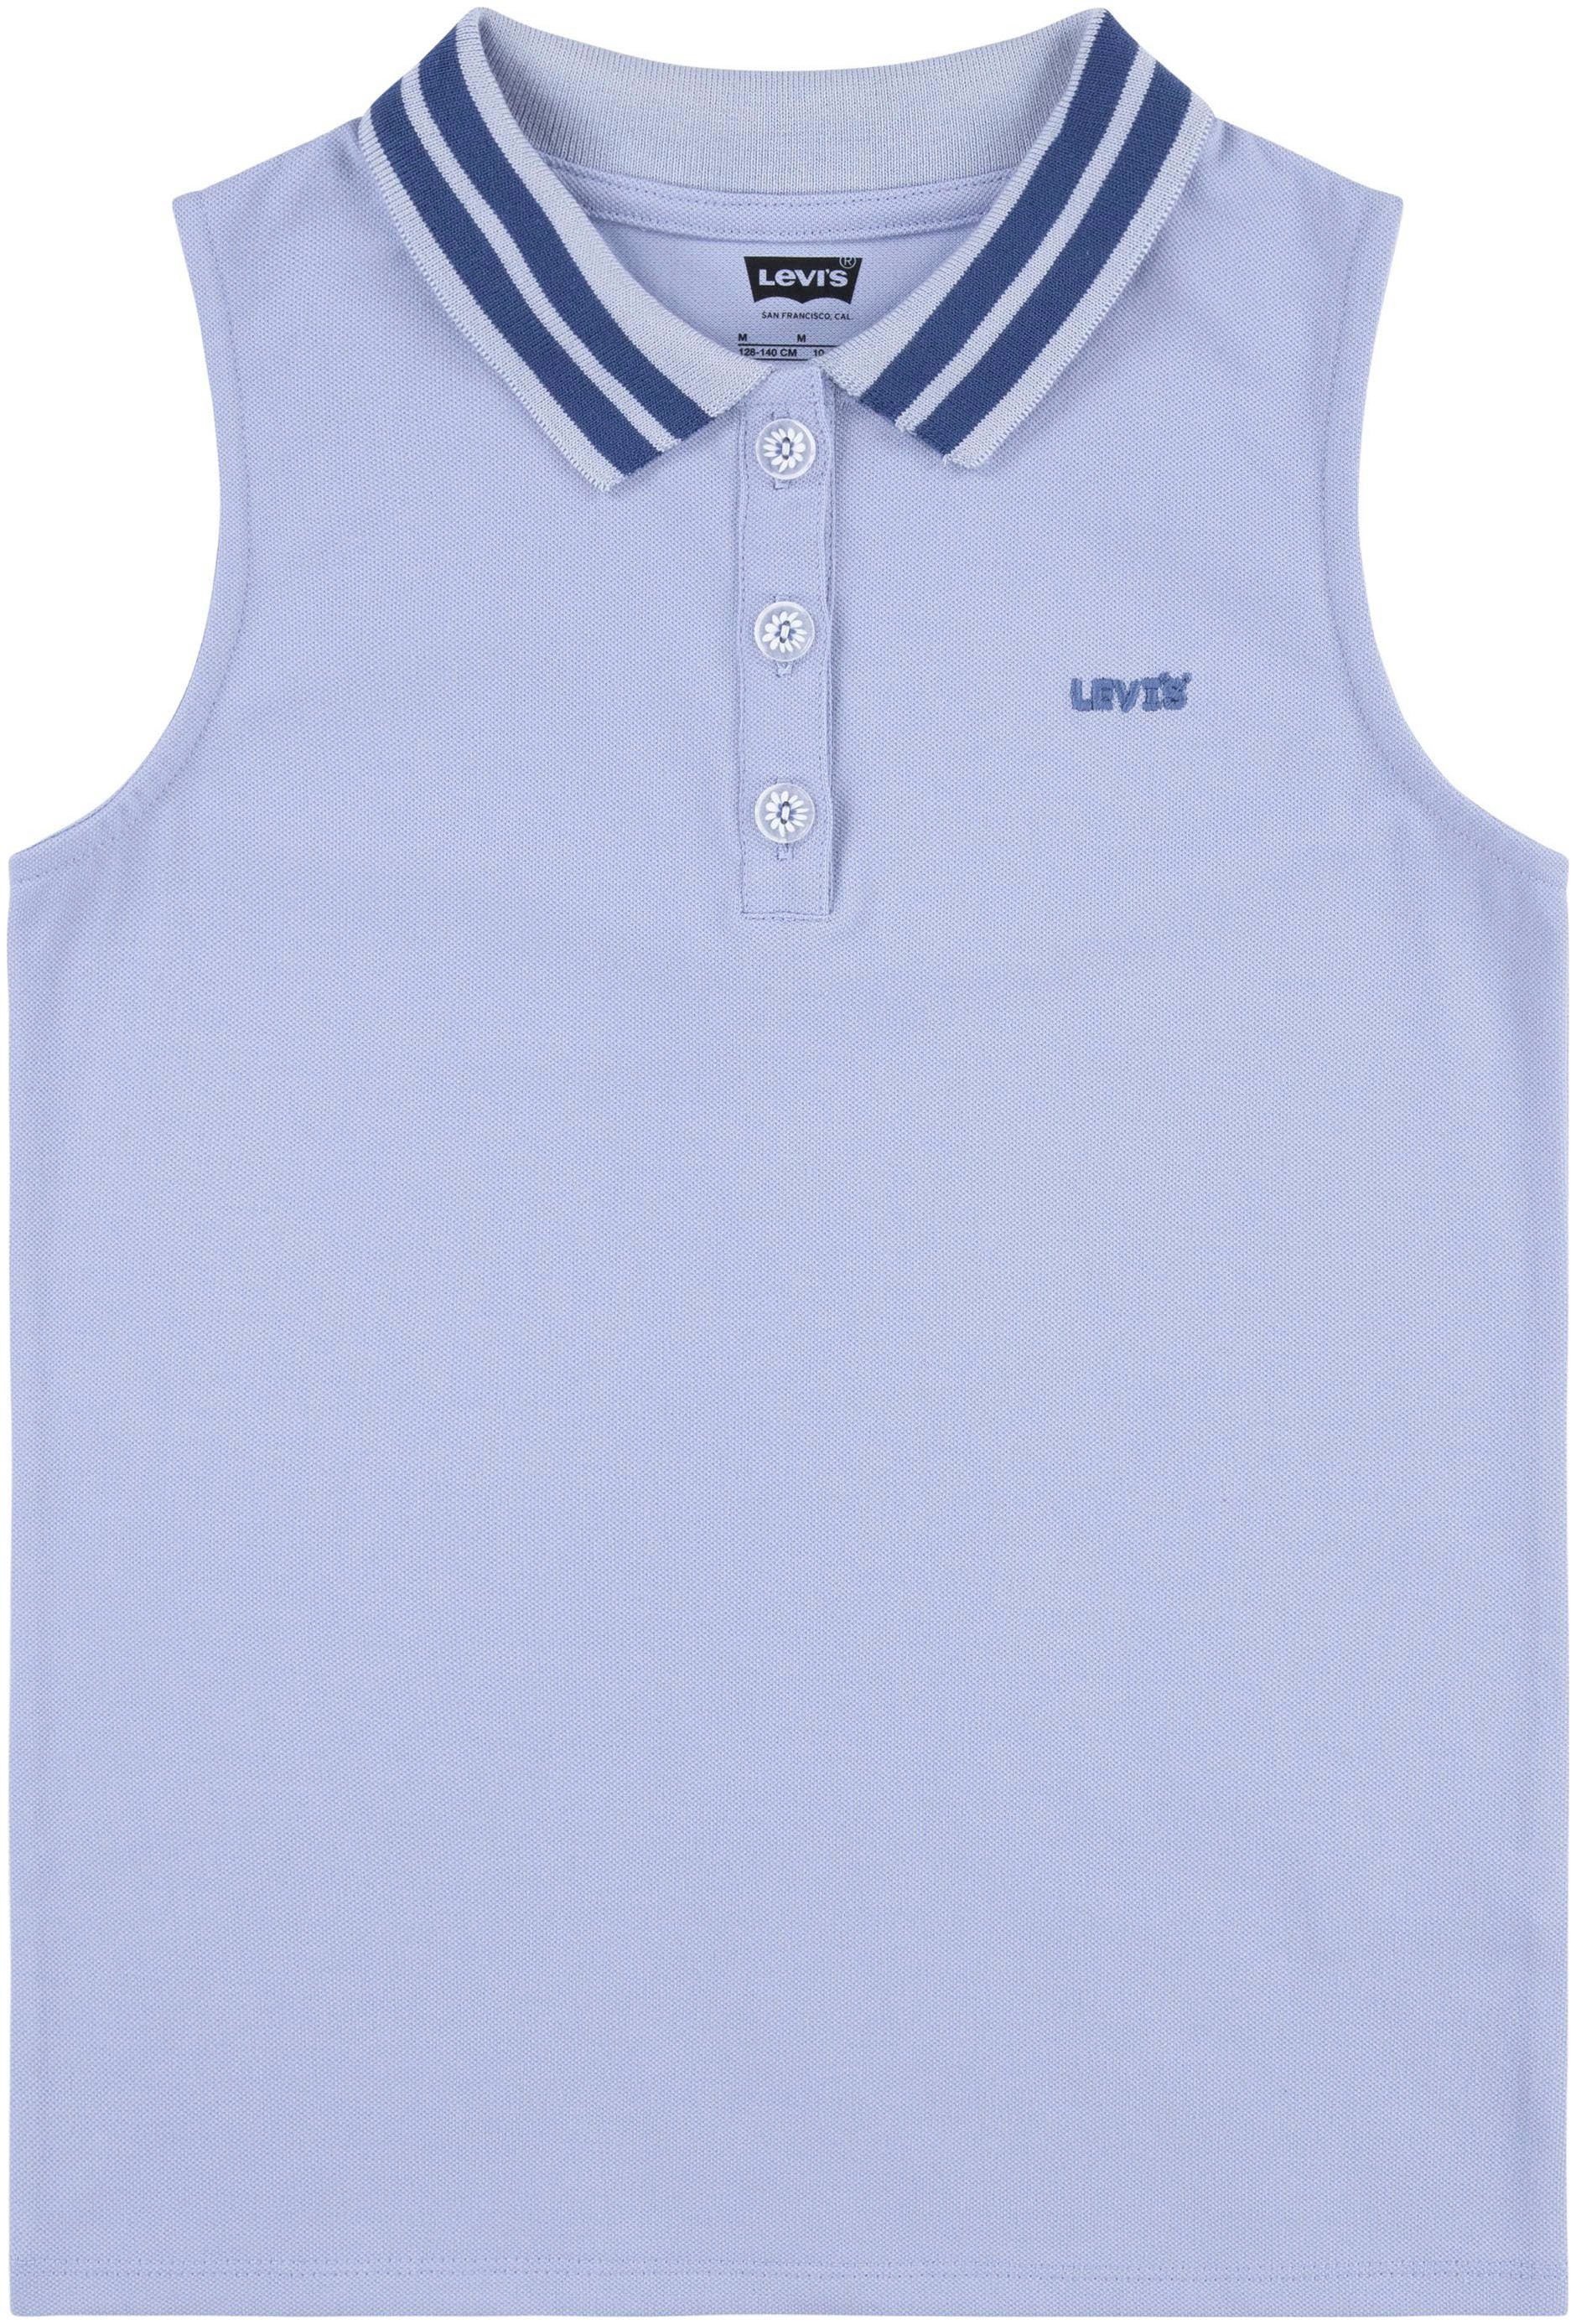 Levi's Kidswear Shirttop for girls